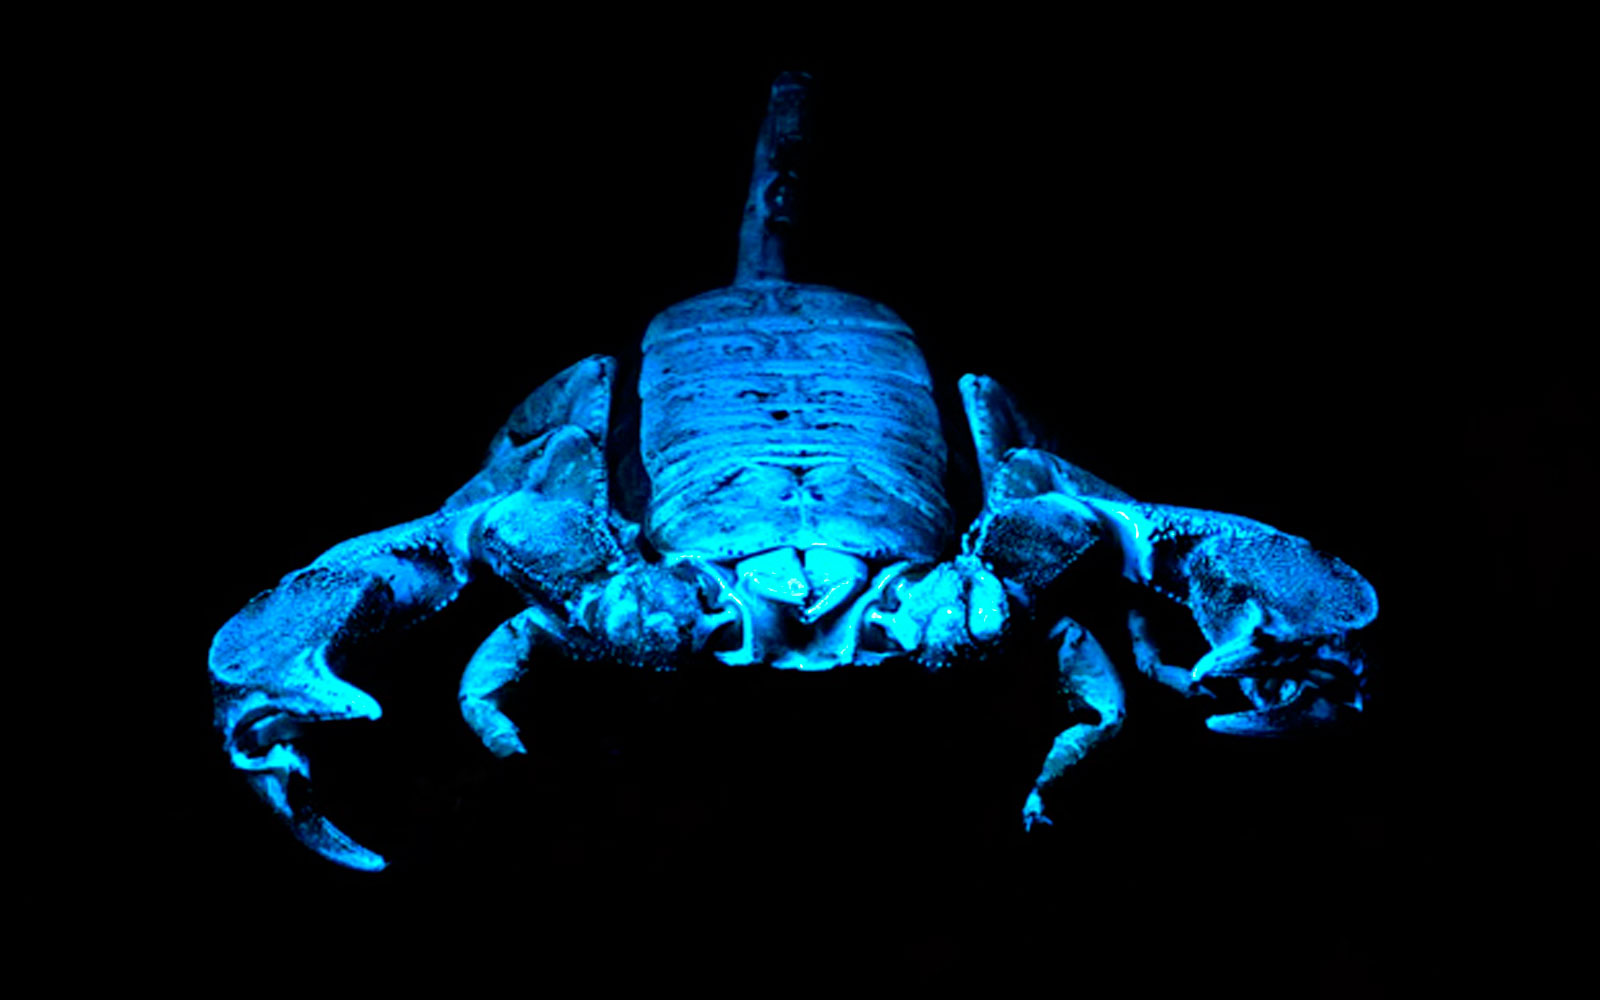 Rock scorpion under ultraviolet light.